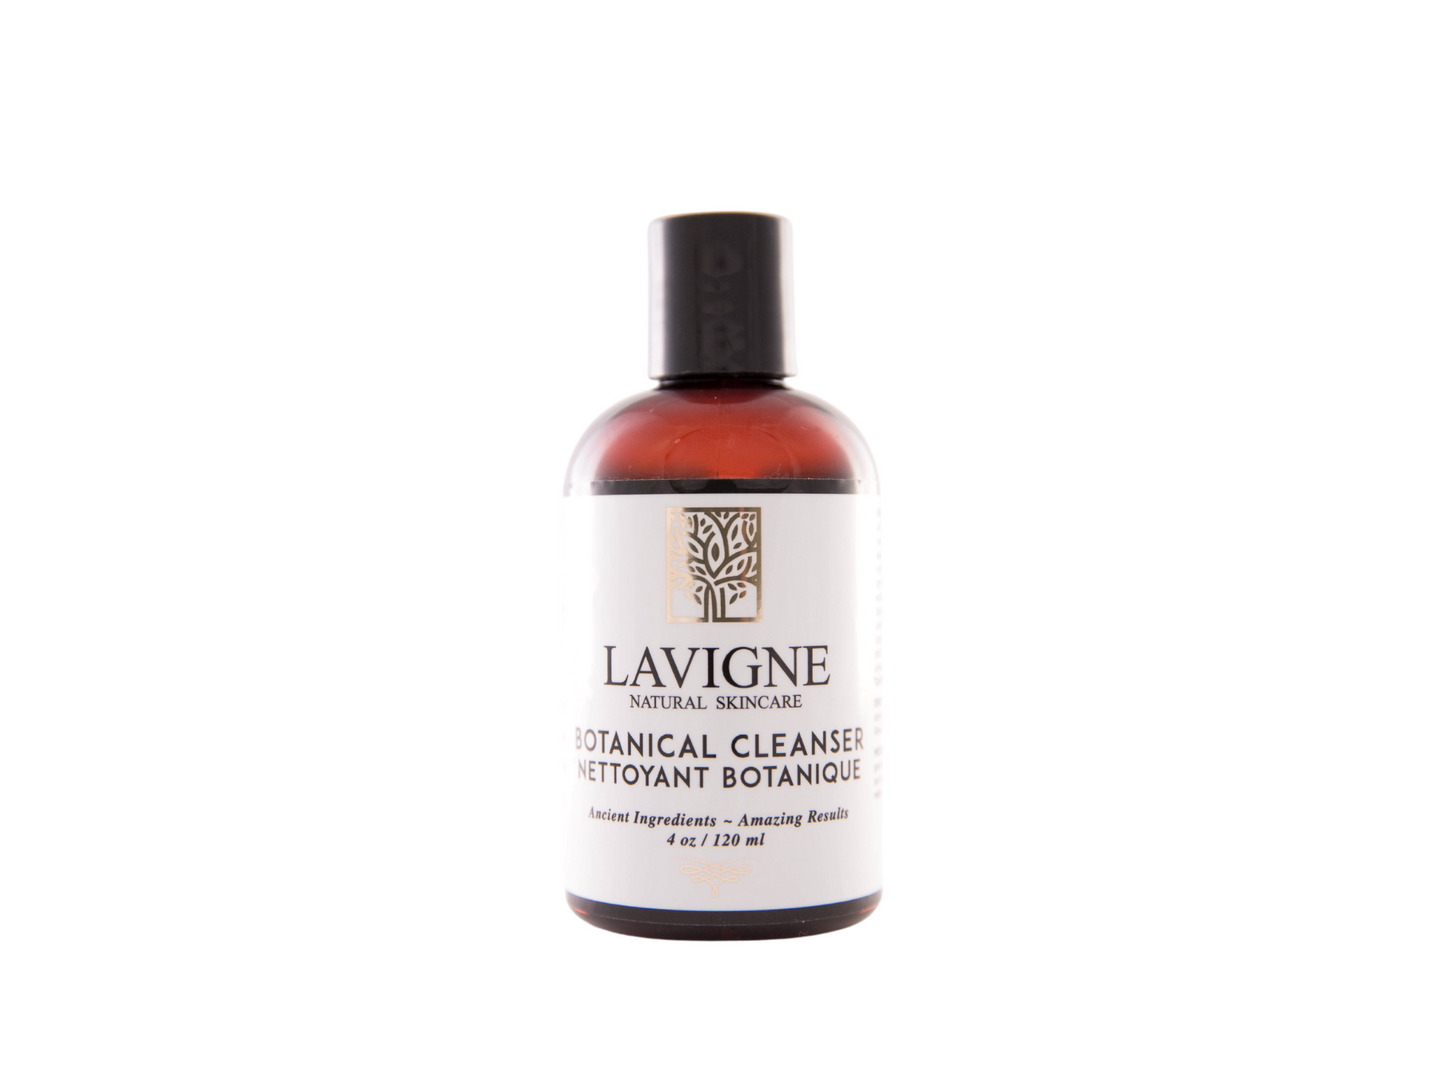 Lavigne Natural Skincare - Botanical Cleanser Tepezco 20%